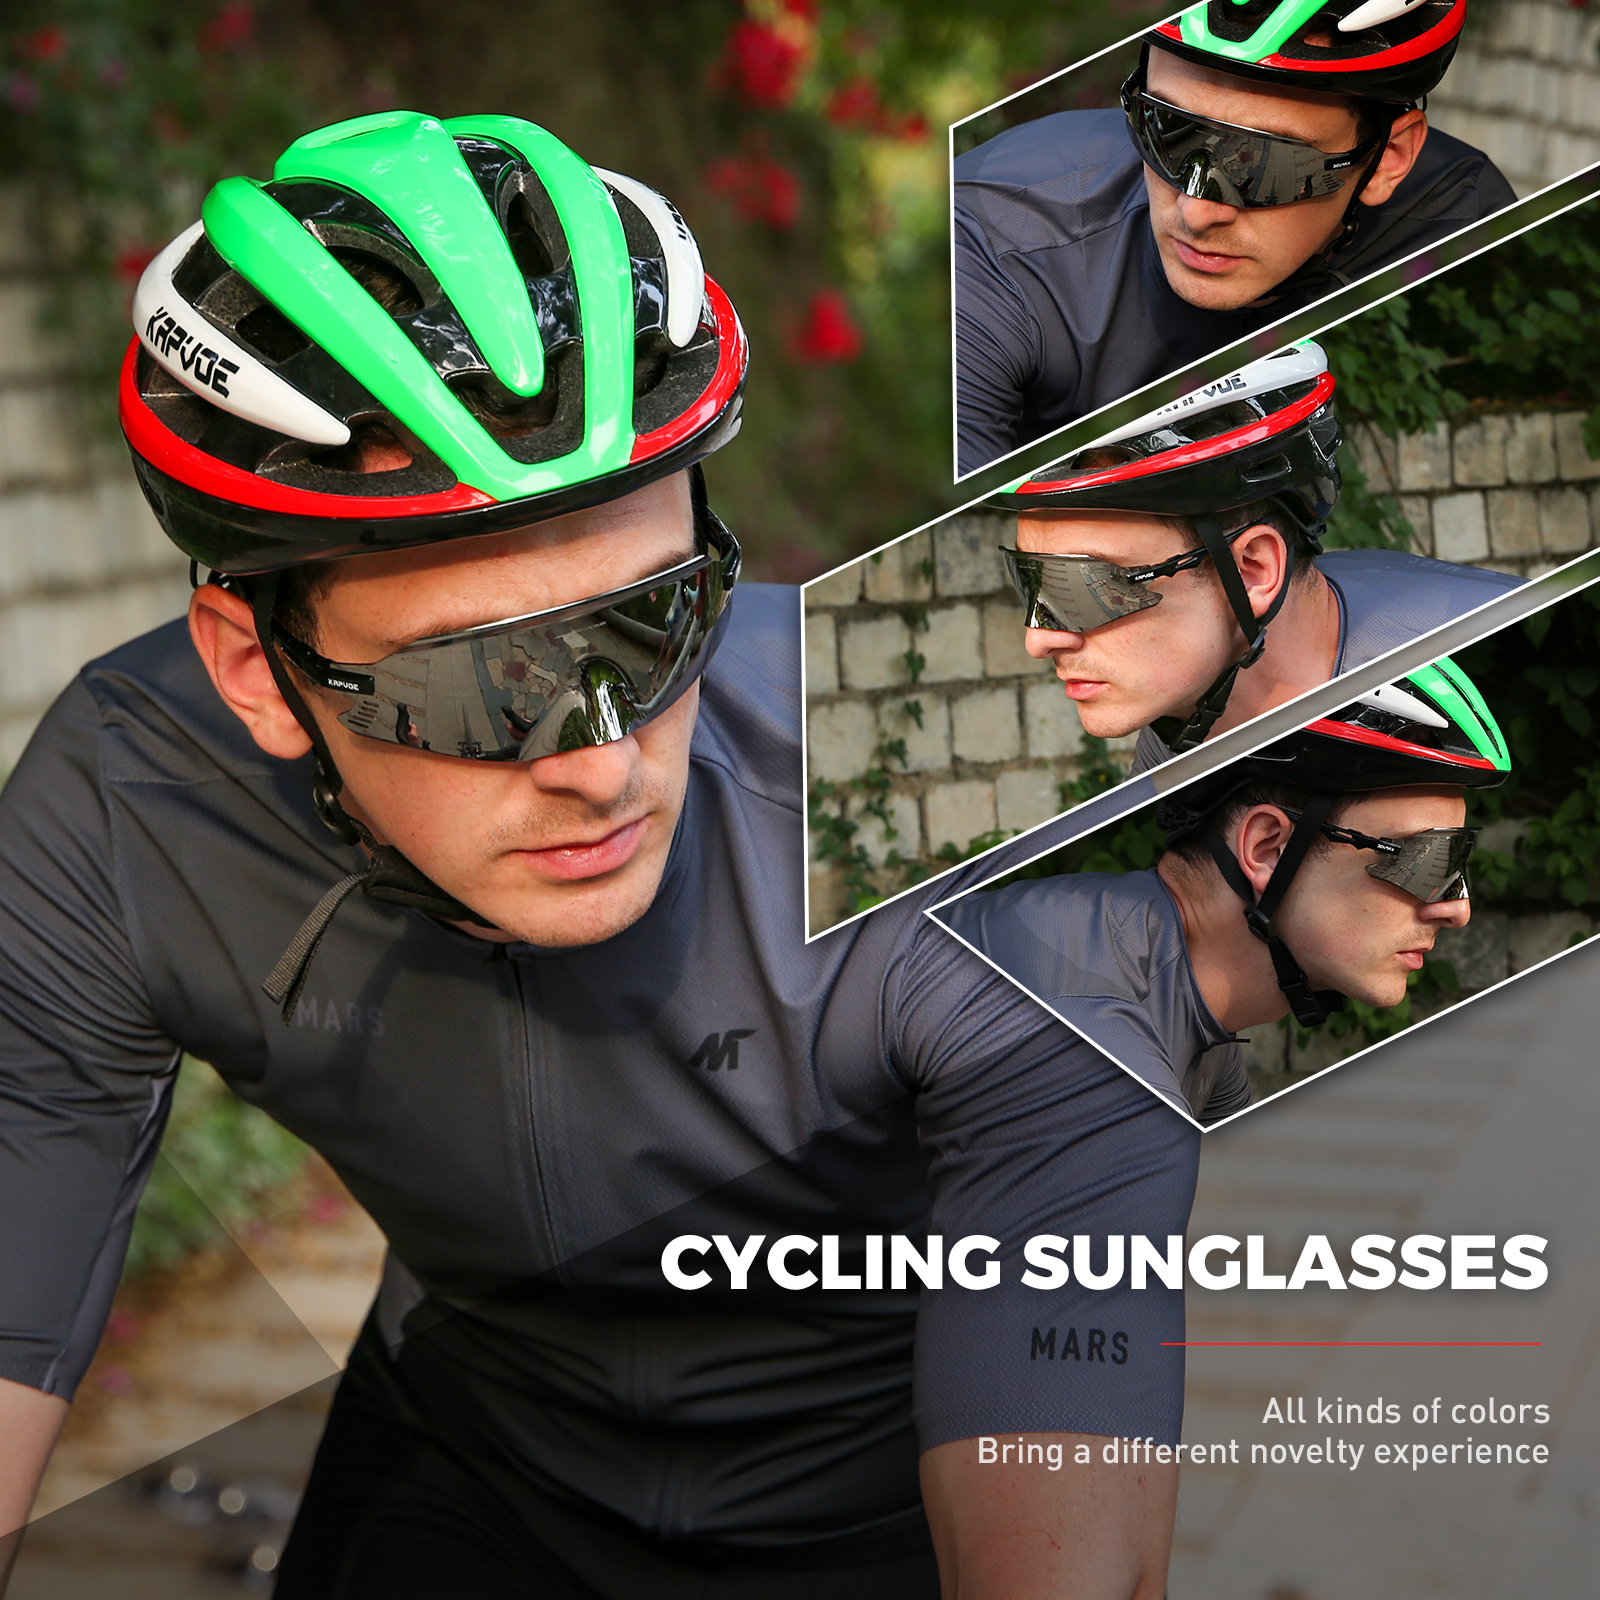 1 Lens New Bike Sunglasses for Men Women, Eyewear Racing Riding Glasses Cycling Goggles, Safety Glasses UV400 MTB Driving Fishing Running Golf